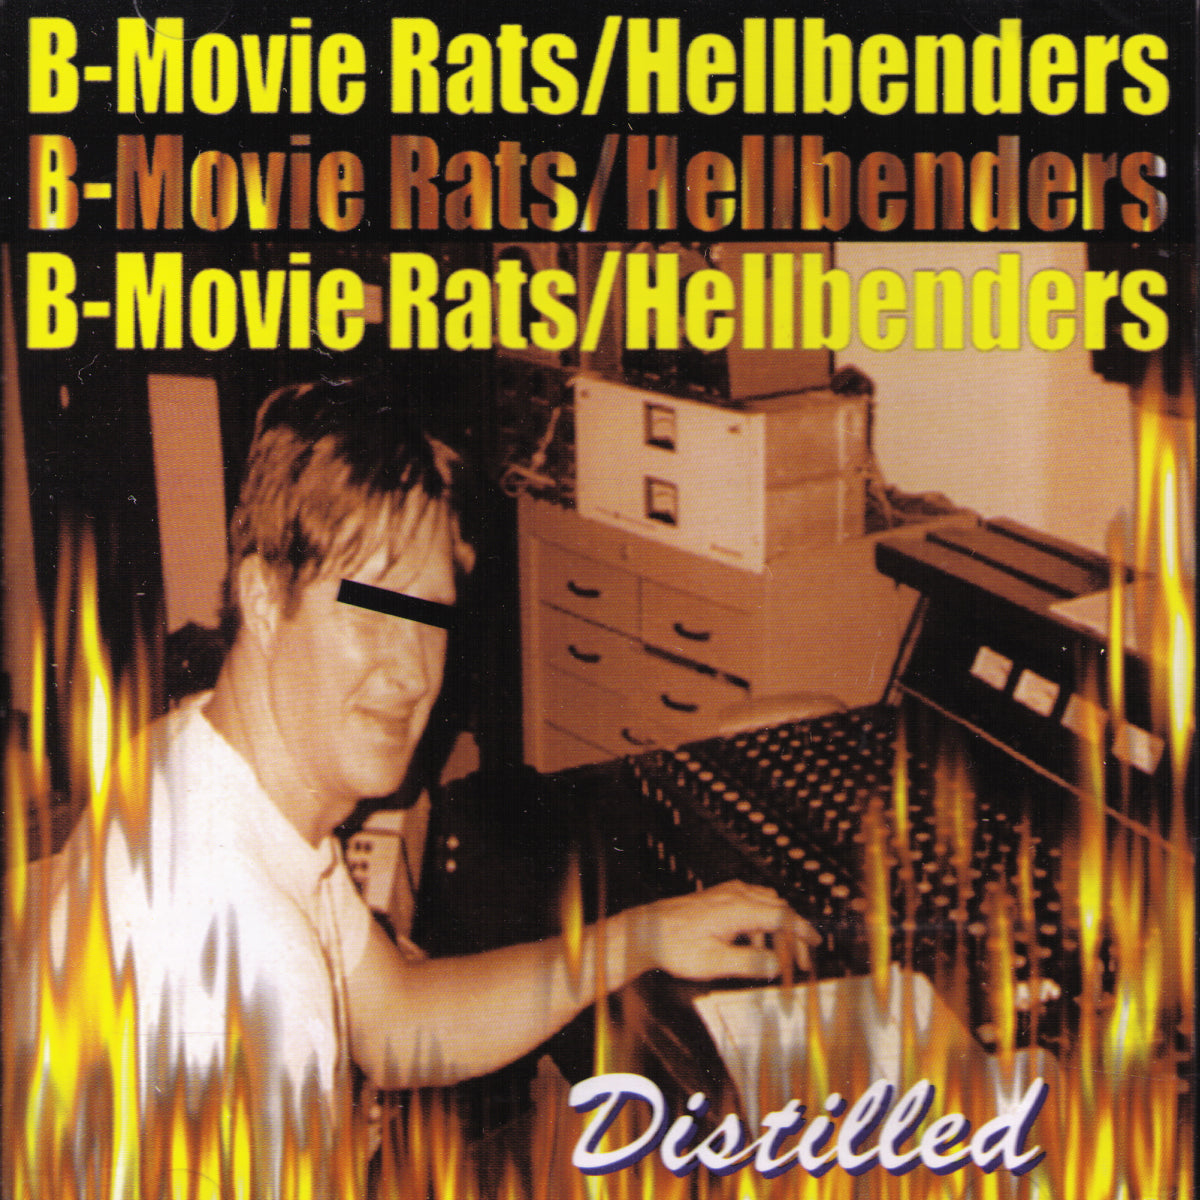 B-Movie Rats / Hellbenders- 'Distilled' Split CD ~CANDY SNATCHERS!